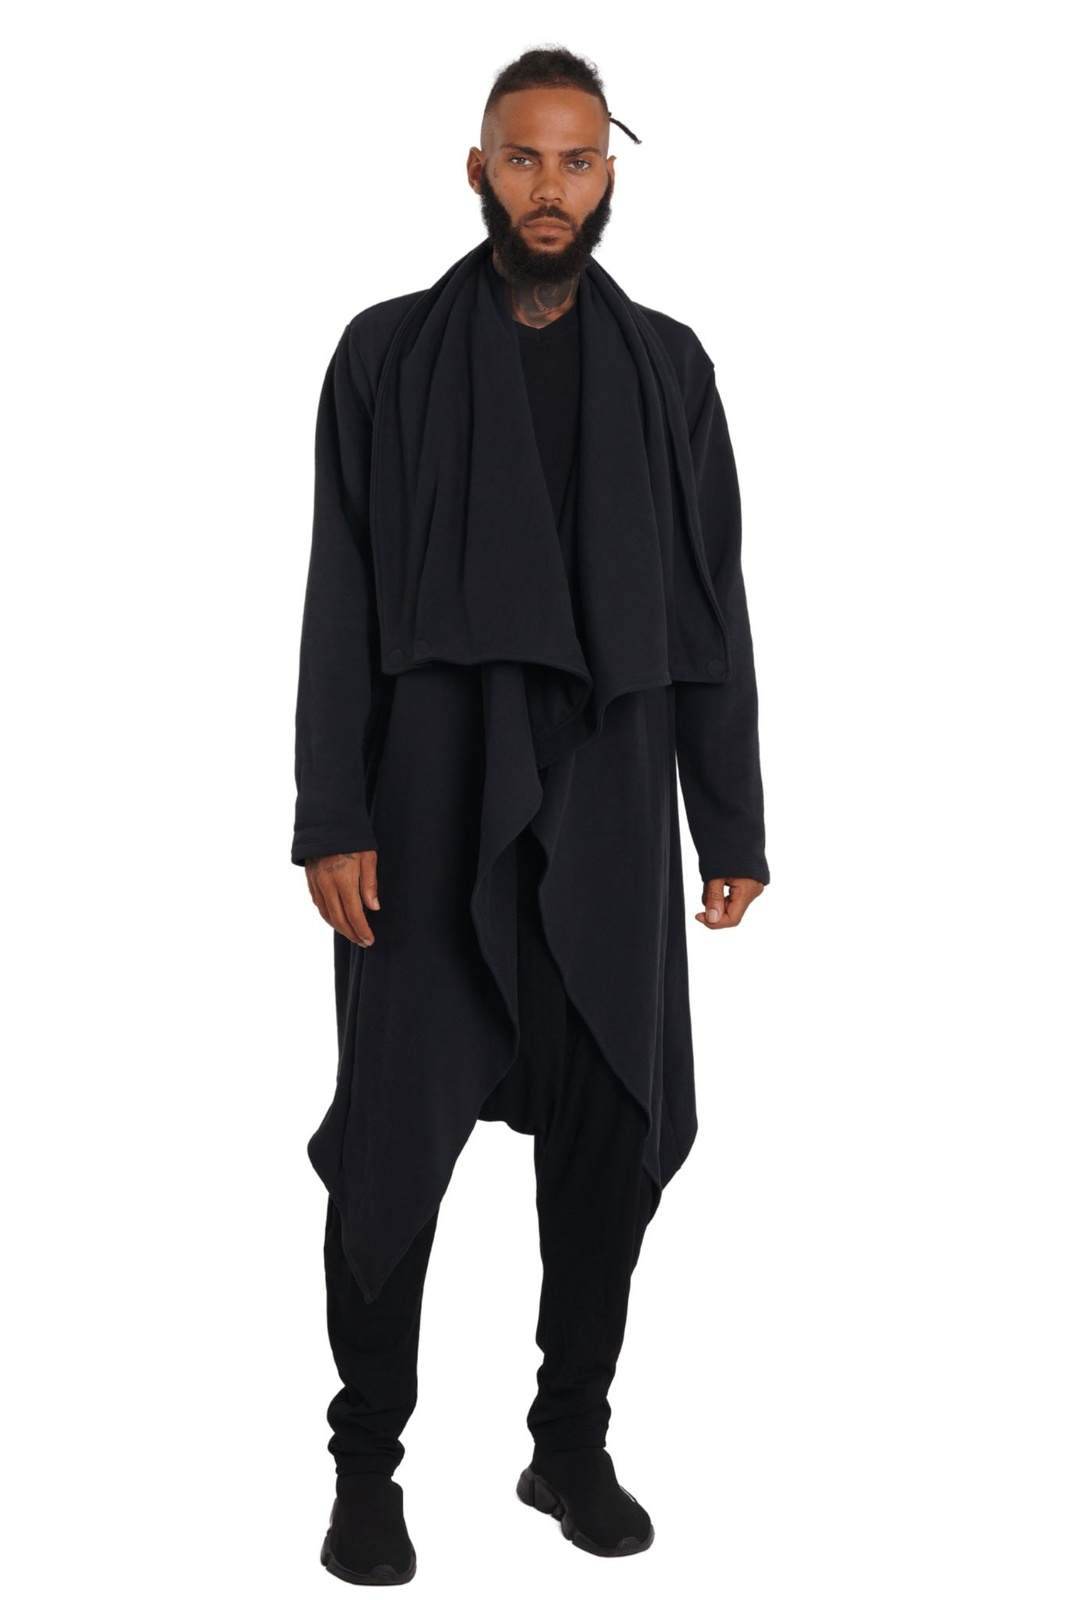 Mens high collar coat in black organic cotton from Ekoluxe